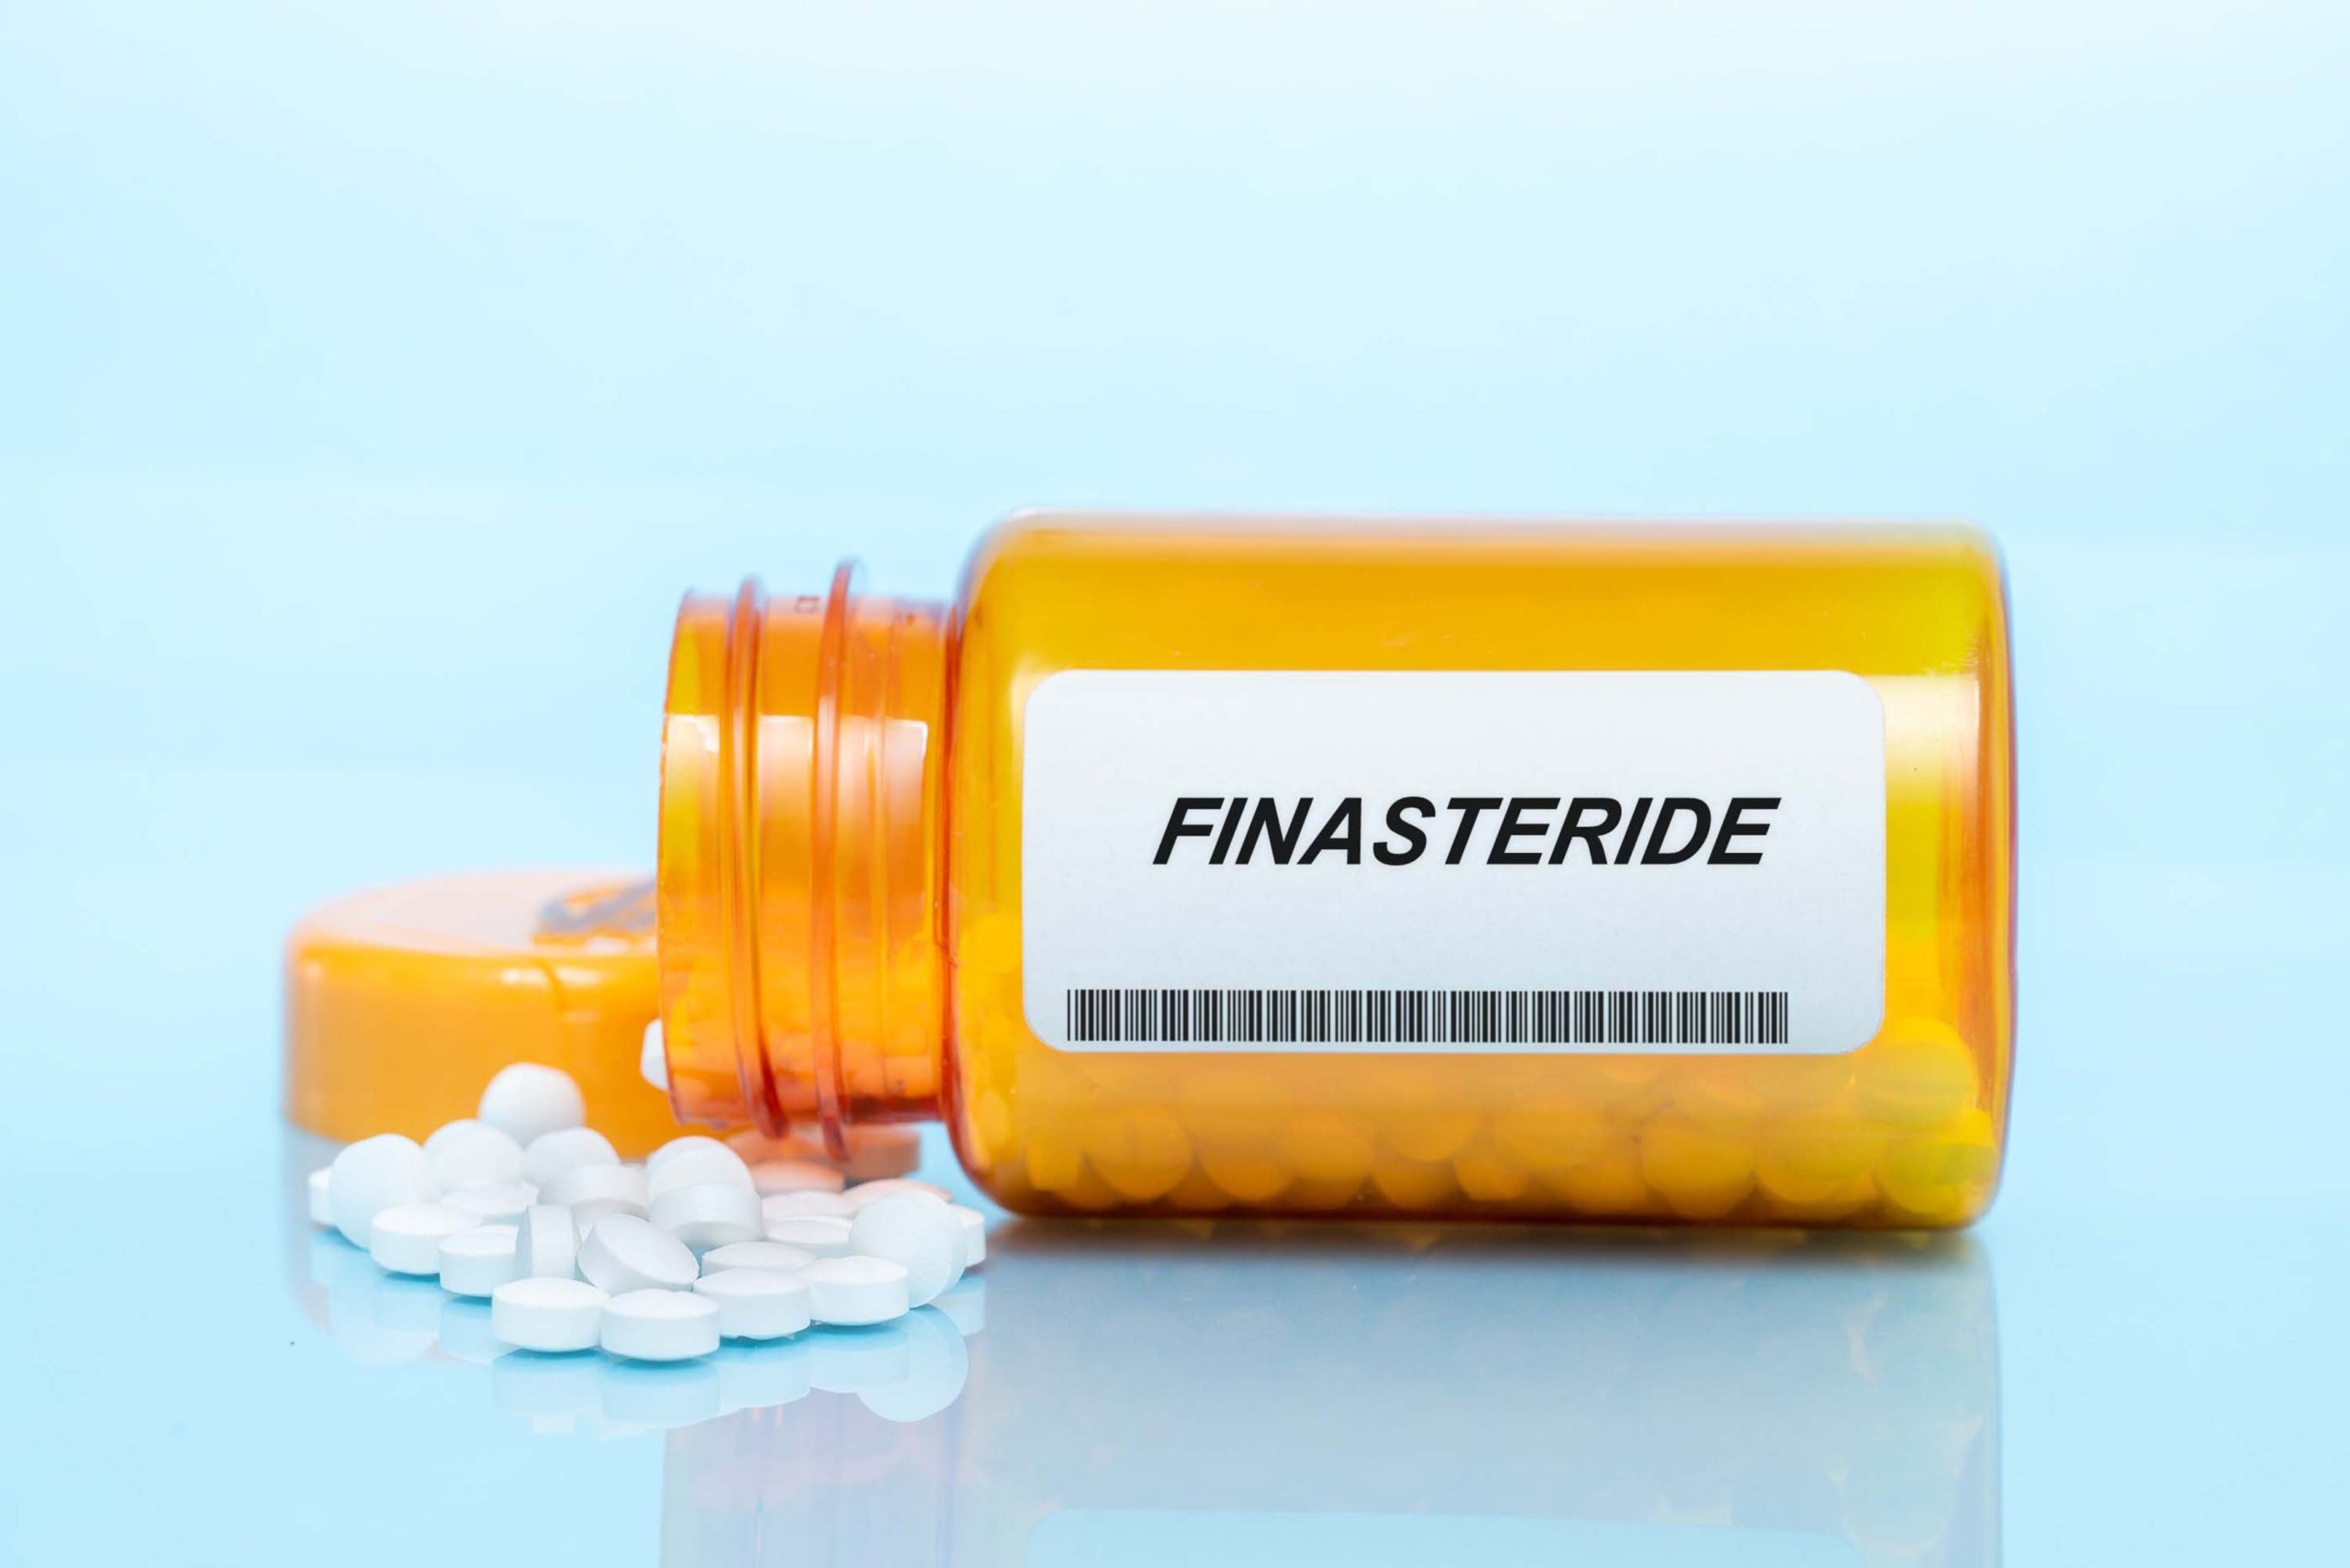 A bottle of Finasteride pills